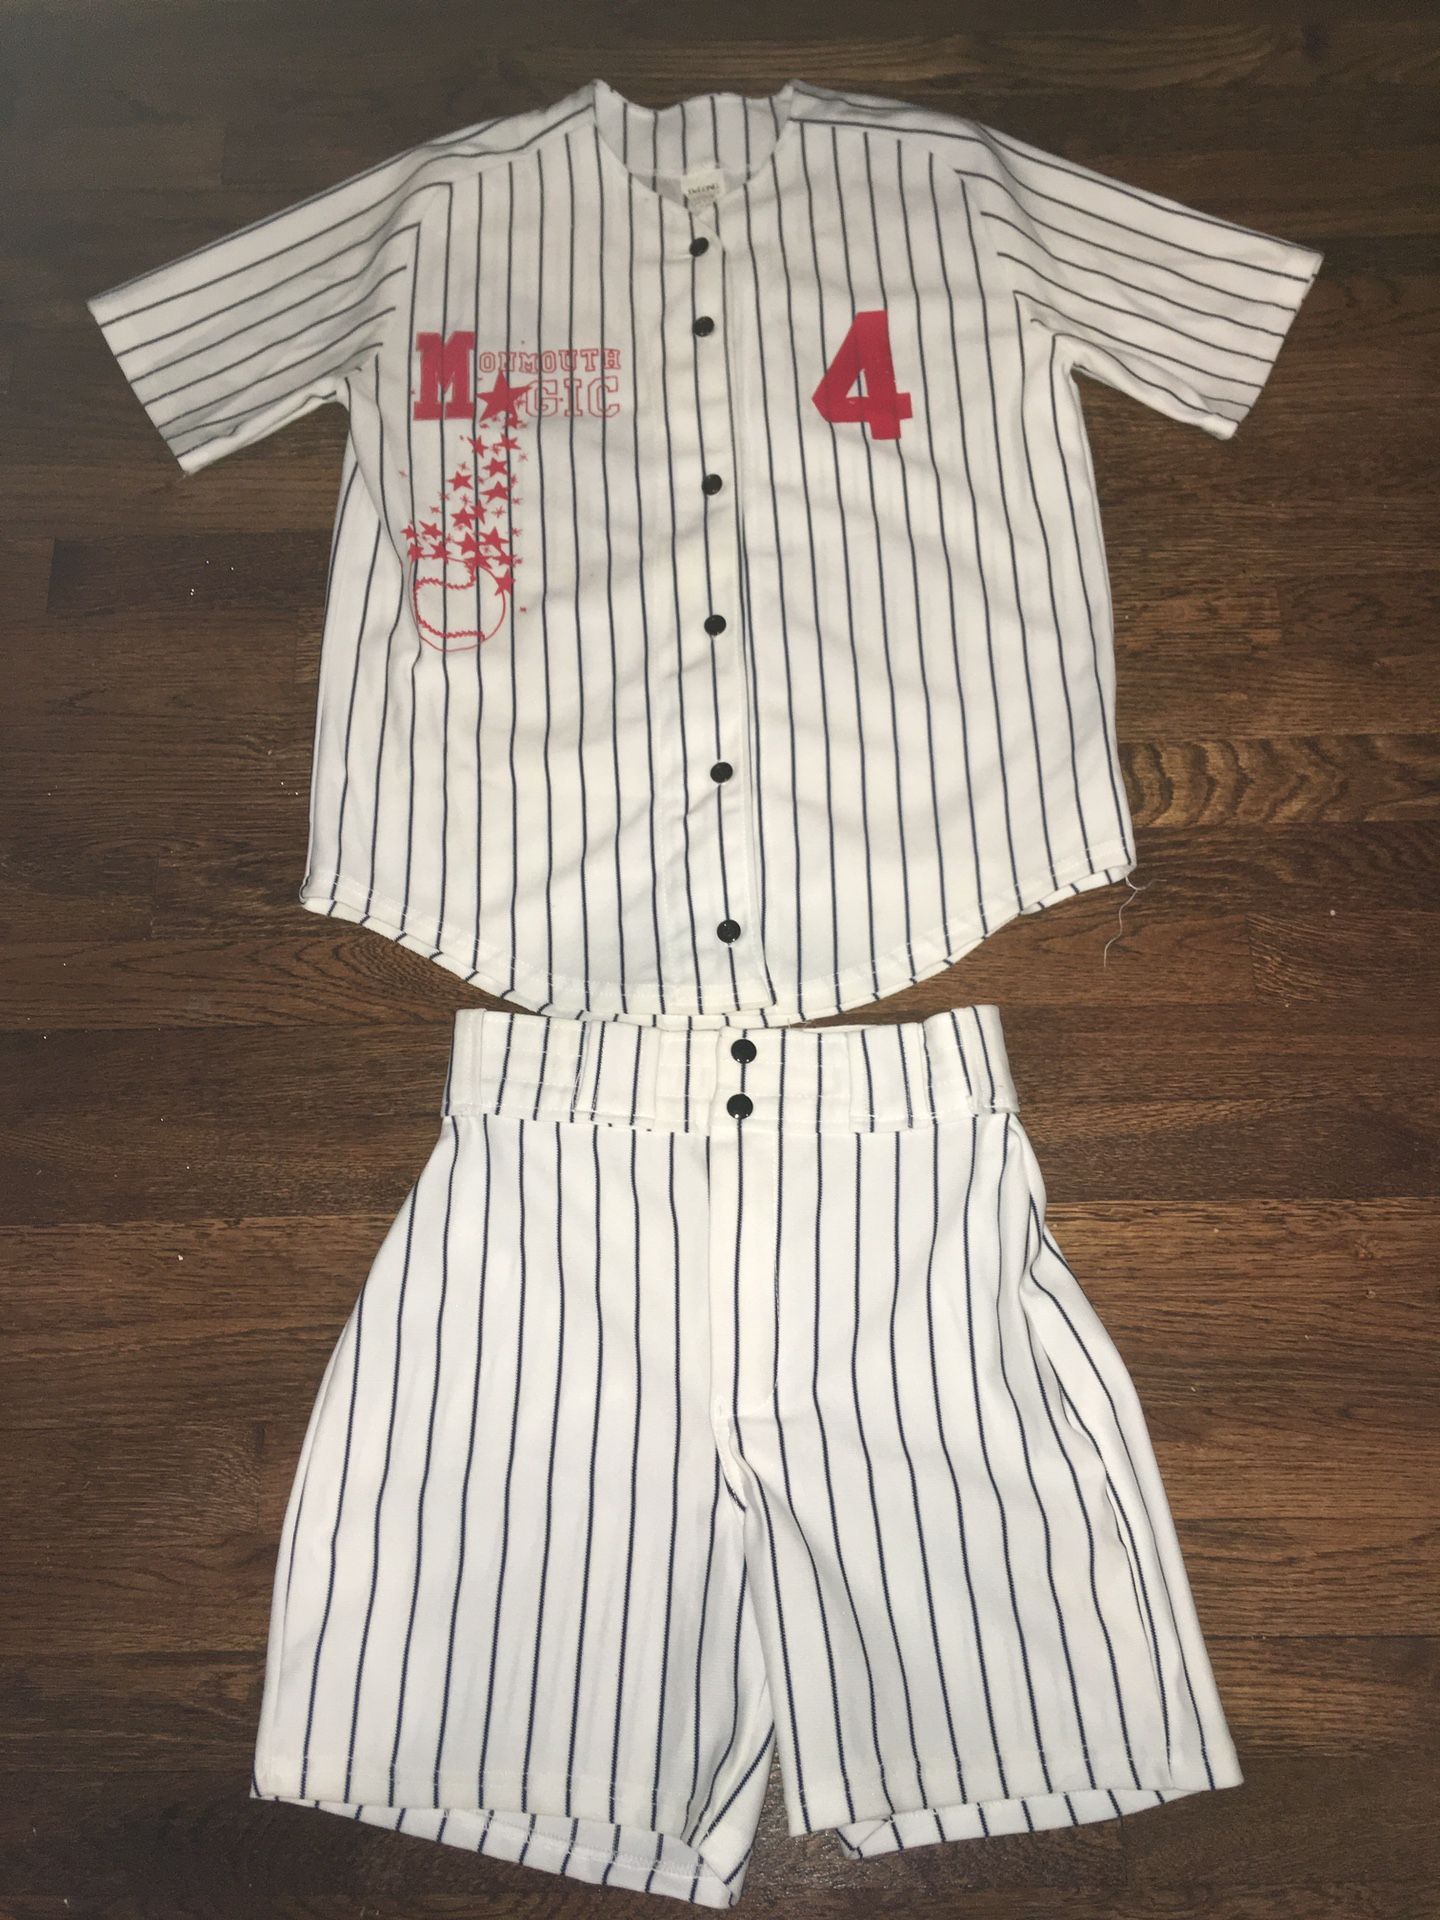 Baseball uniform/costume- size medium